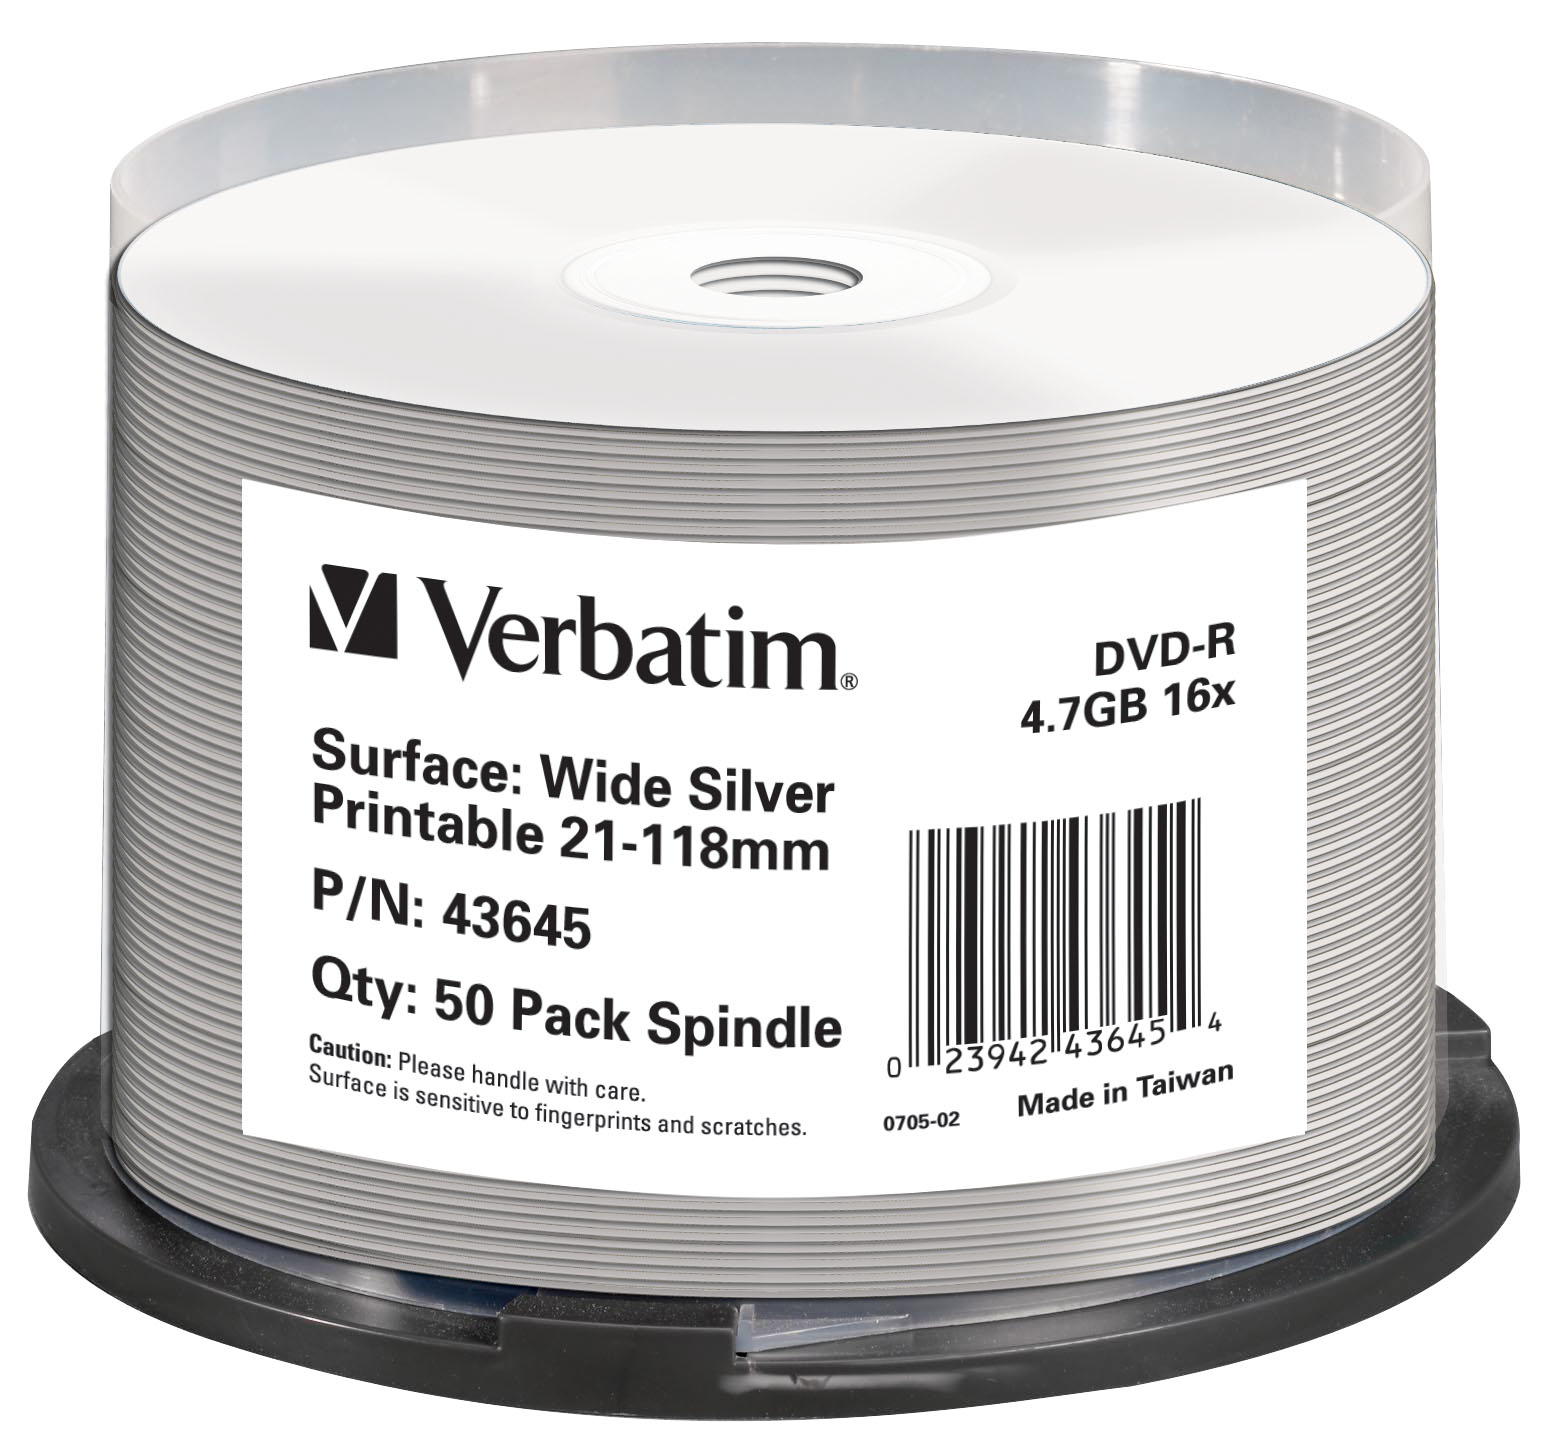 verbatim-dvd-r-datalifeplus-4-7gb-16x-silver-inkjet-printable